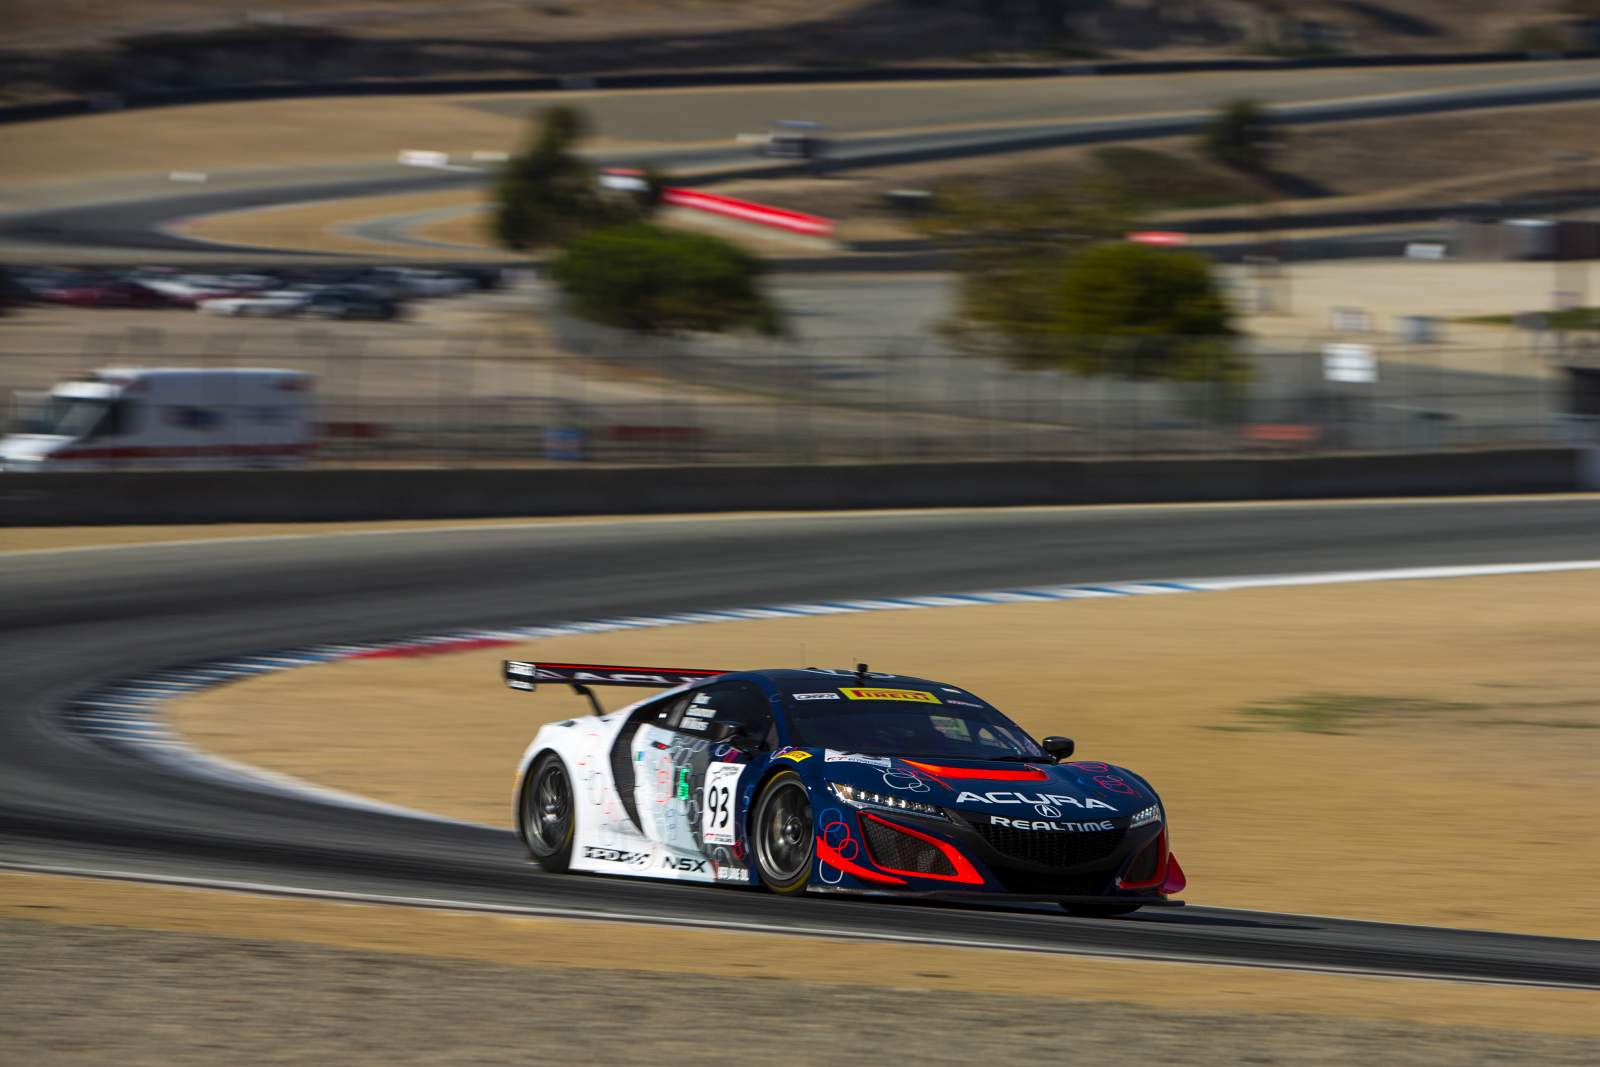 peter-kox-realtime-racing-pirelli-world-challenge-california-008